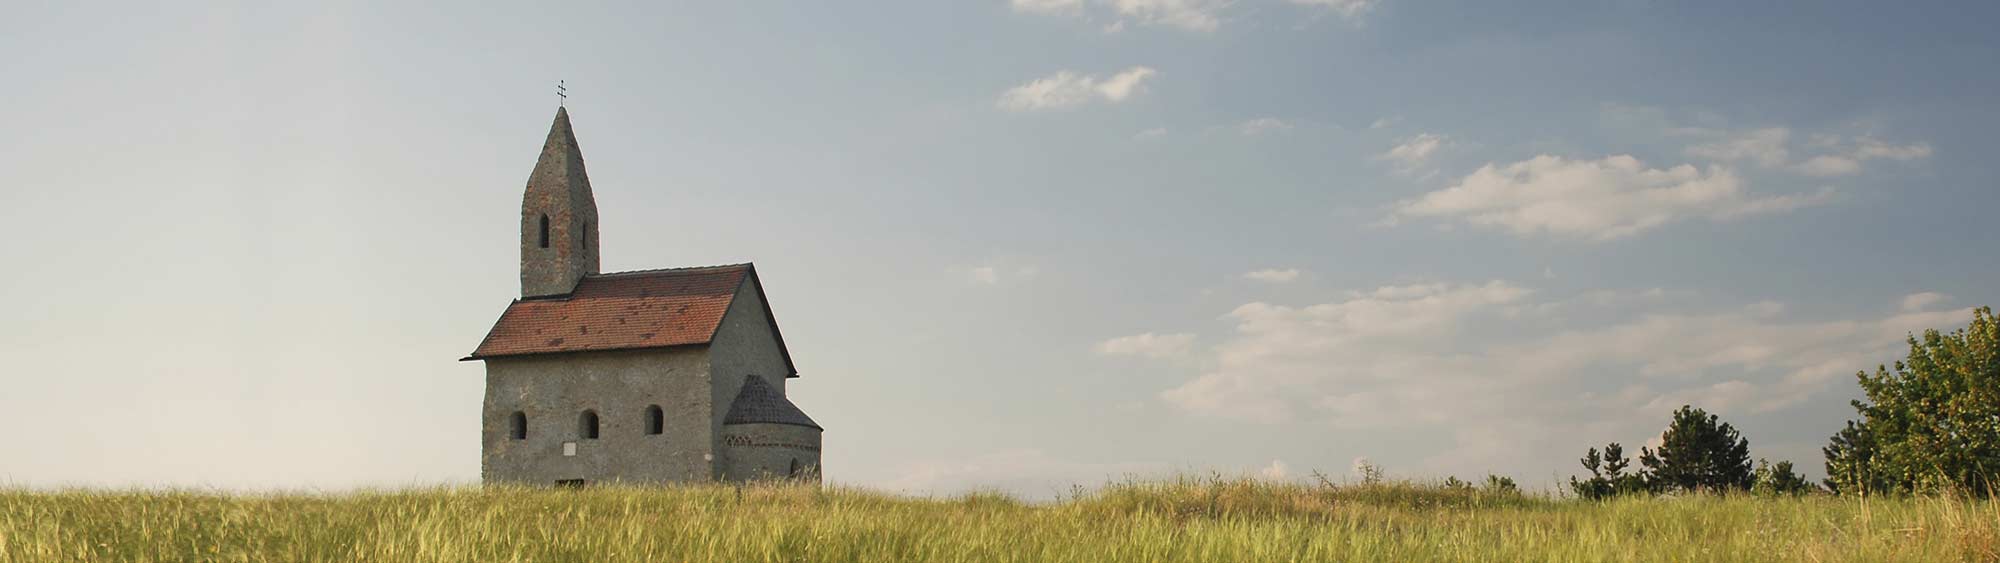 Old church in a field